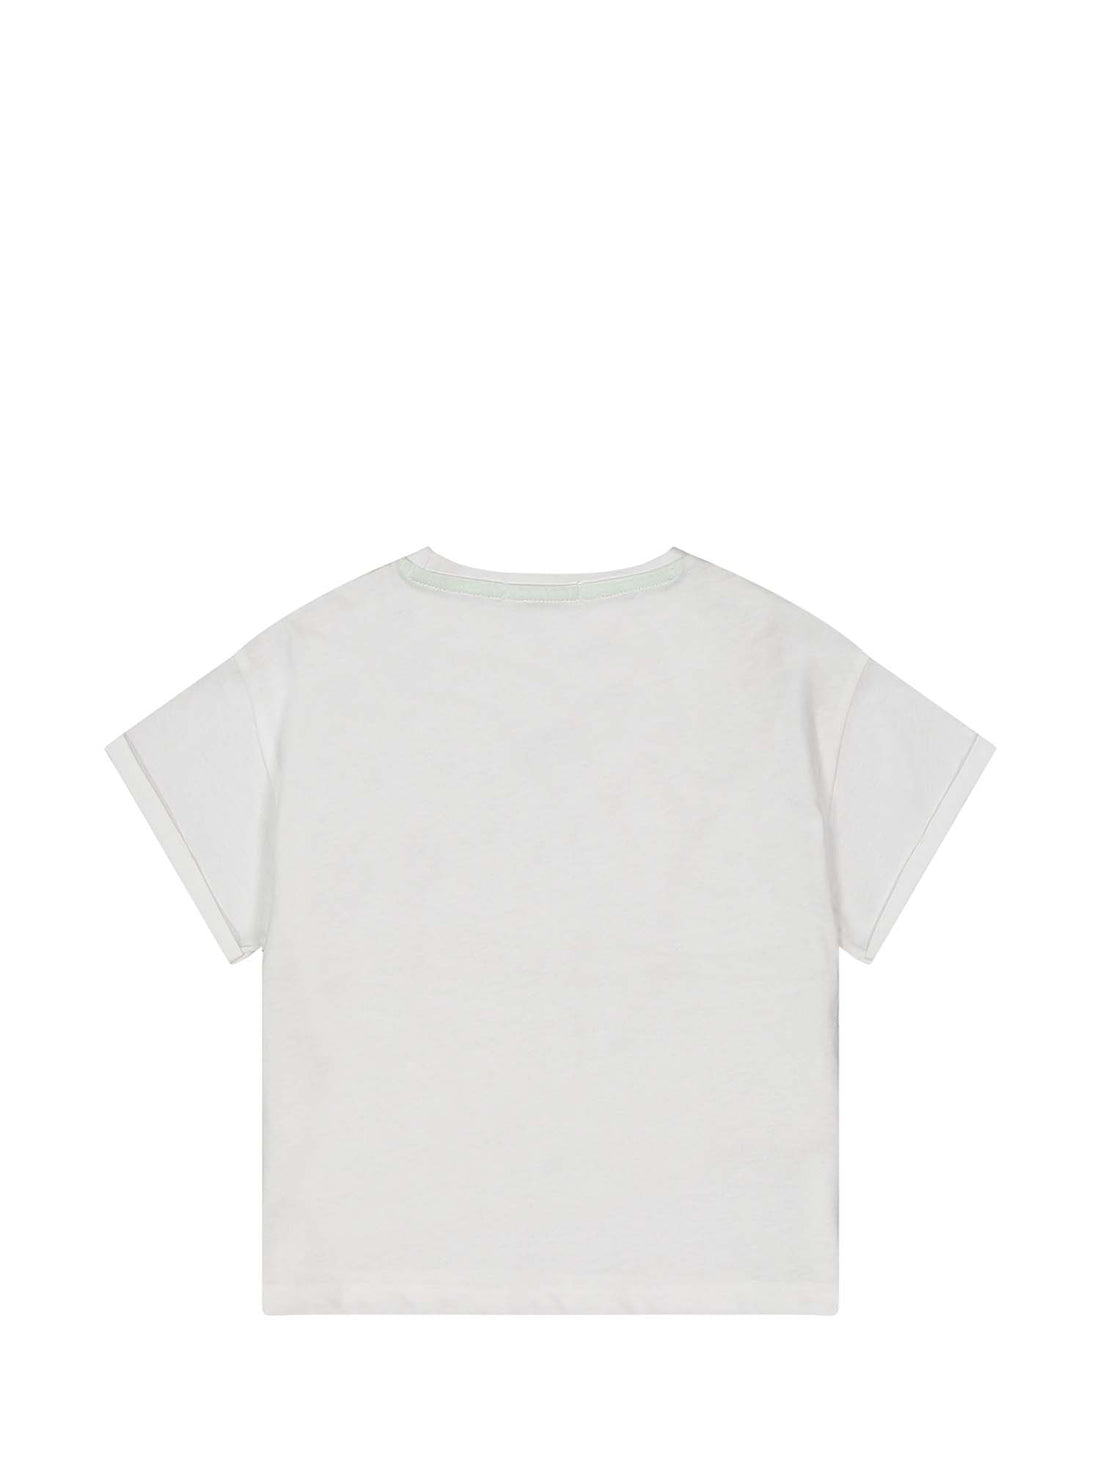 T-shirt Bianco Melby